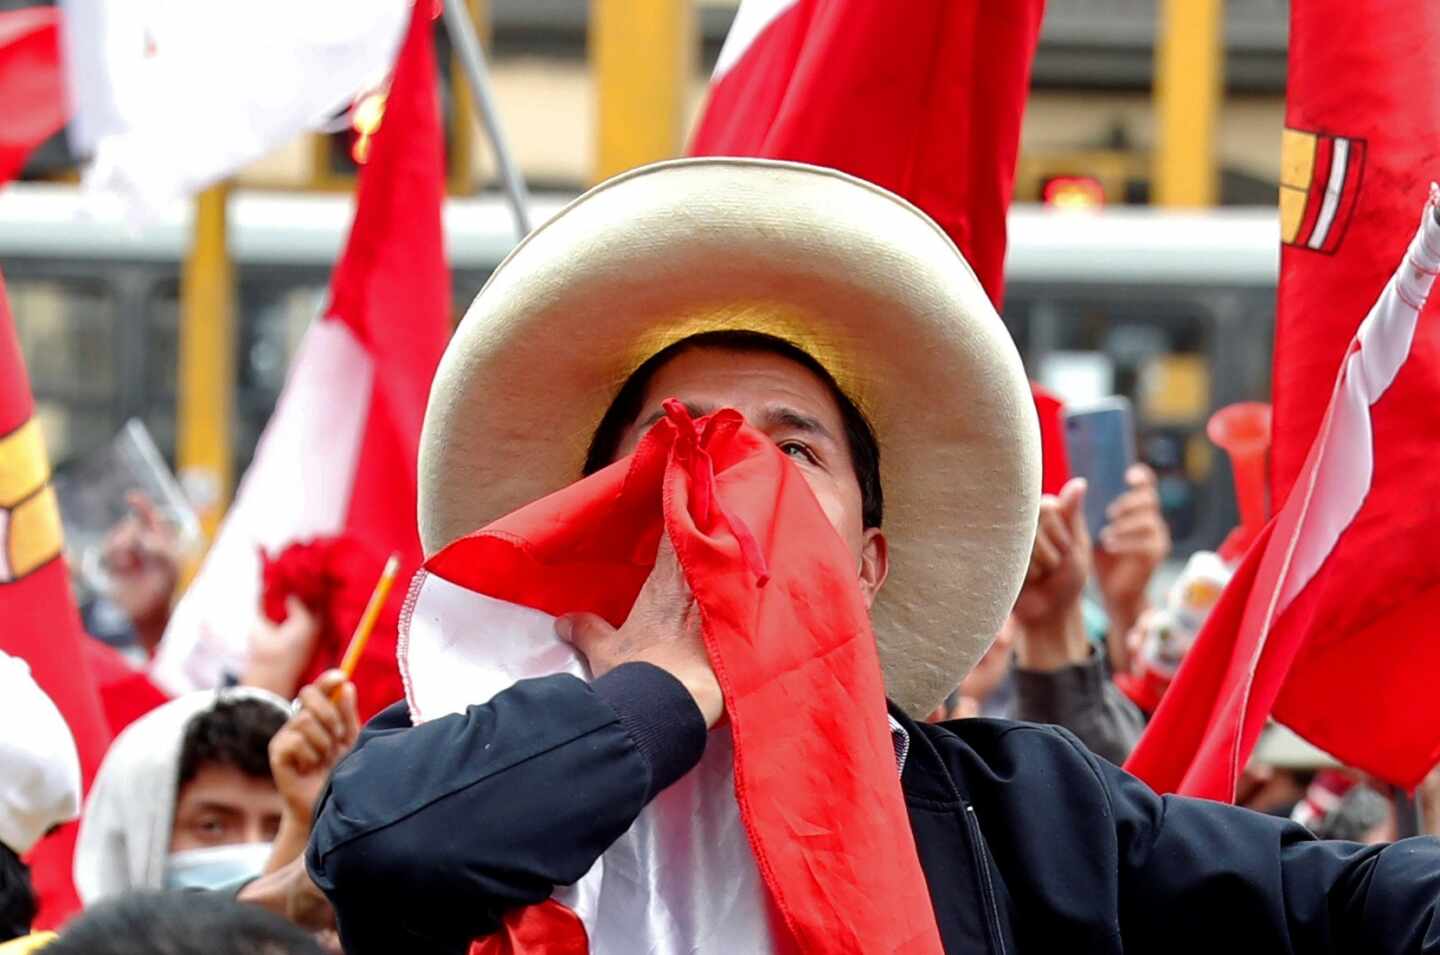 El candidato presidencial peruano Pedro Castillo